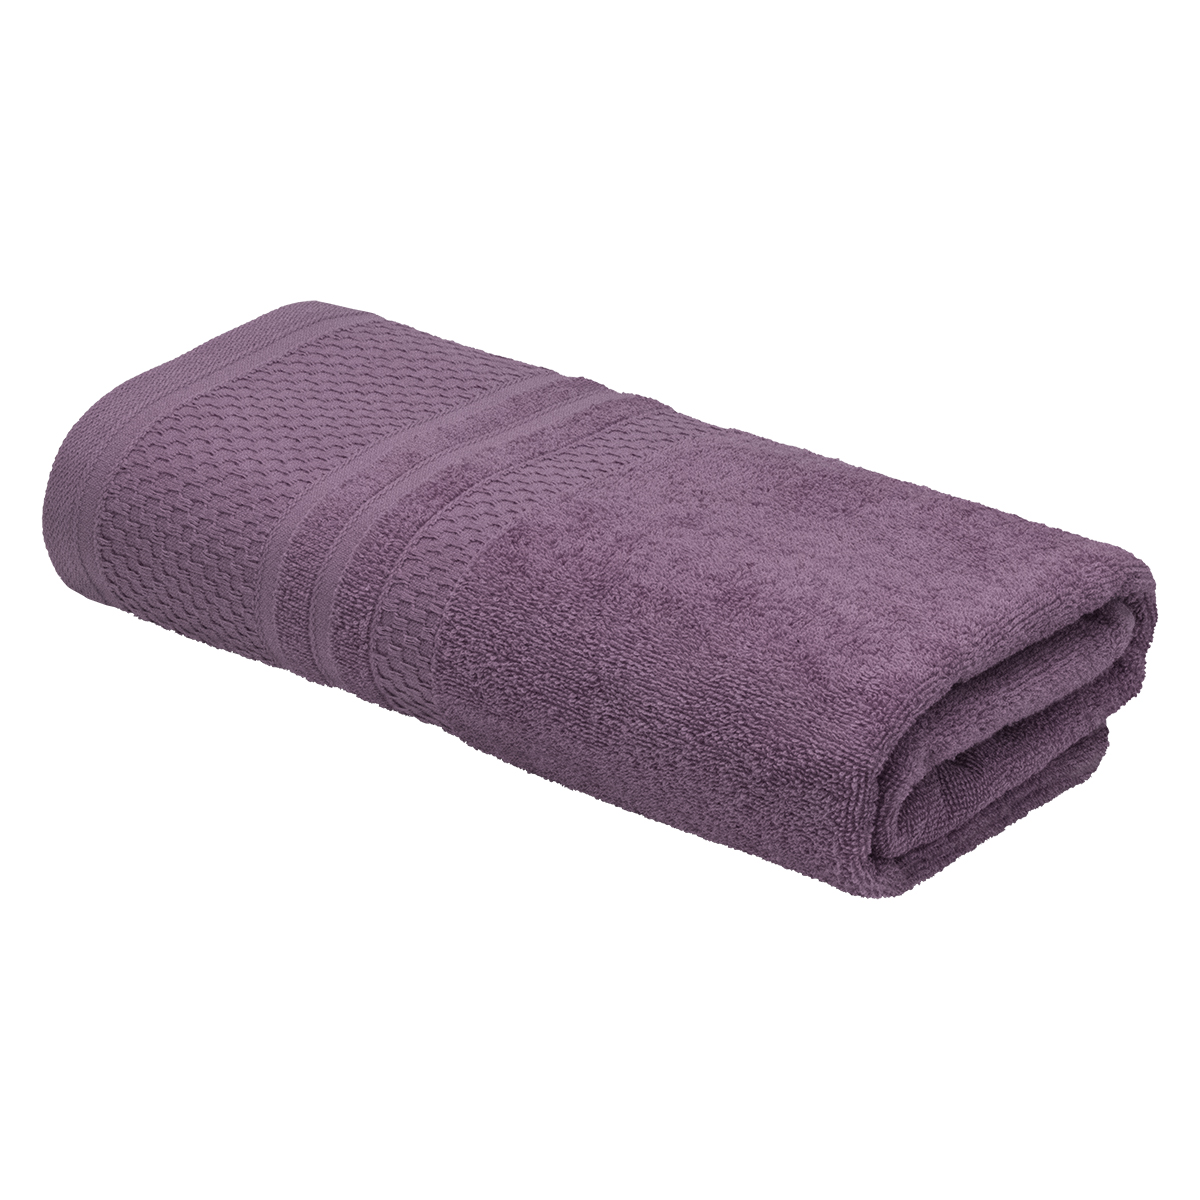 Махровое полотенце для рук и лица 50*80 см полотенце для ванной Пабло 1 шт дымчатый